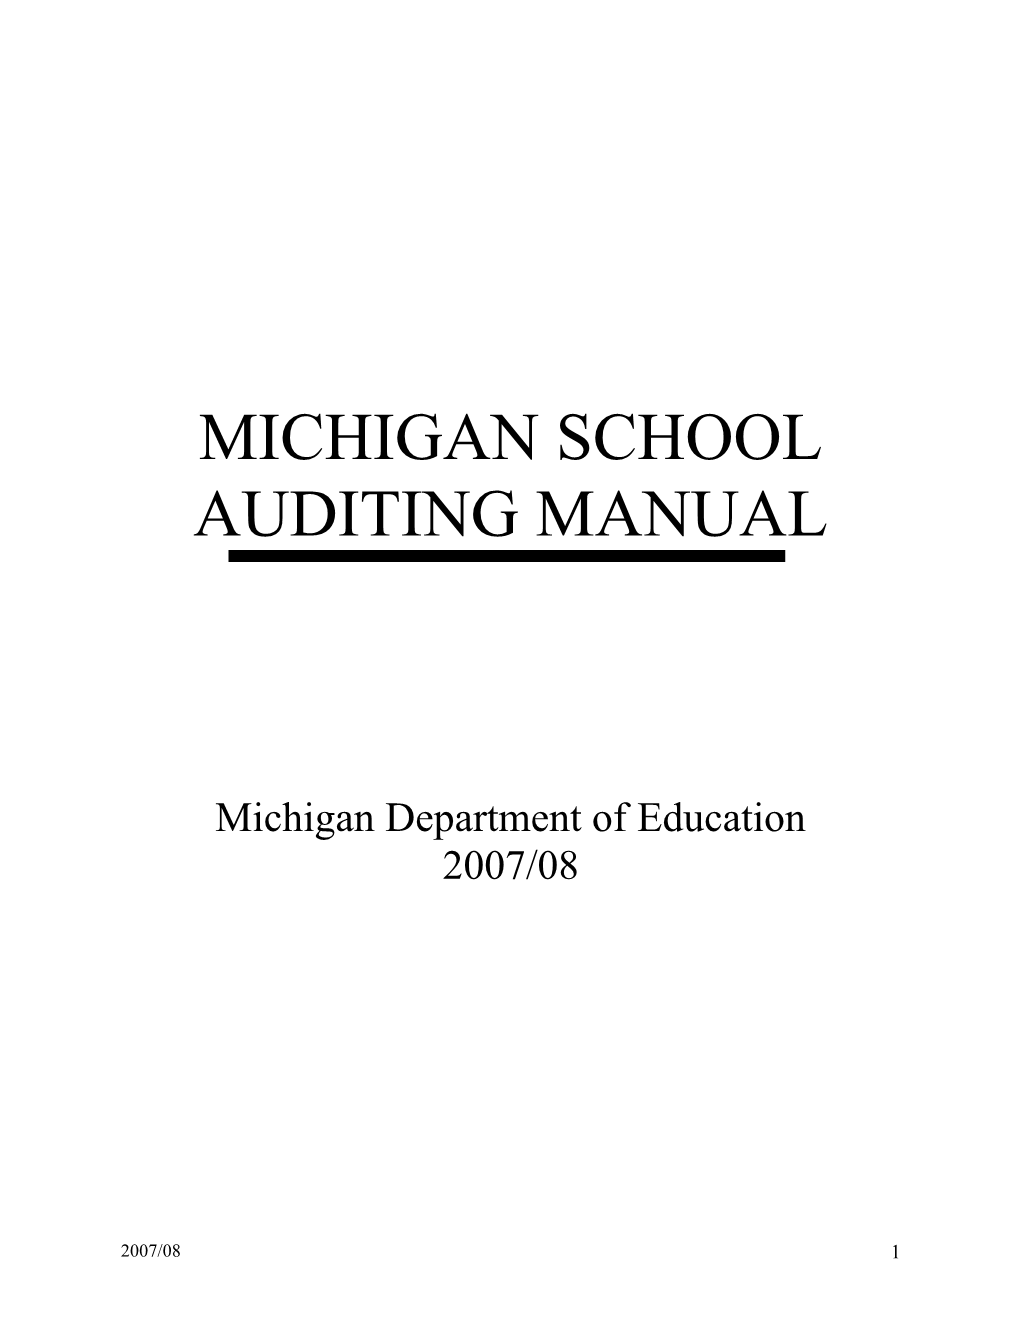 Auditing Manual